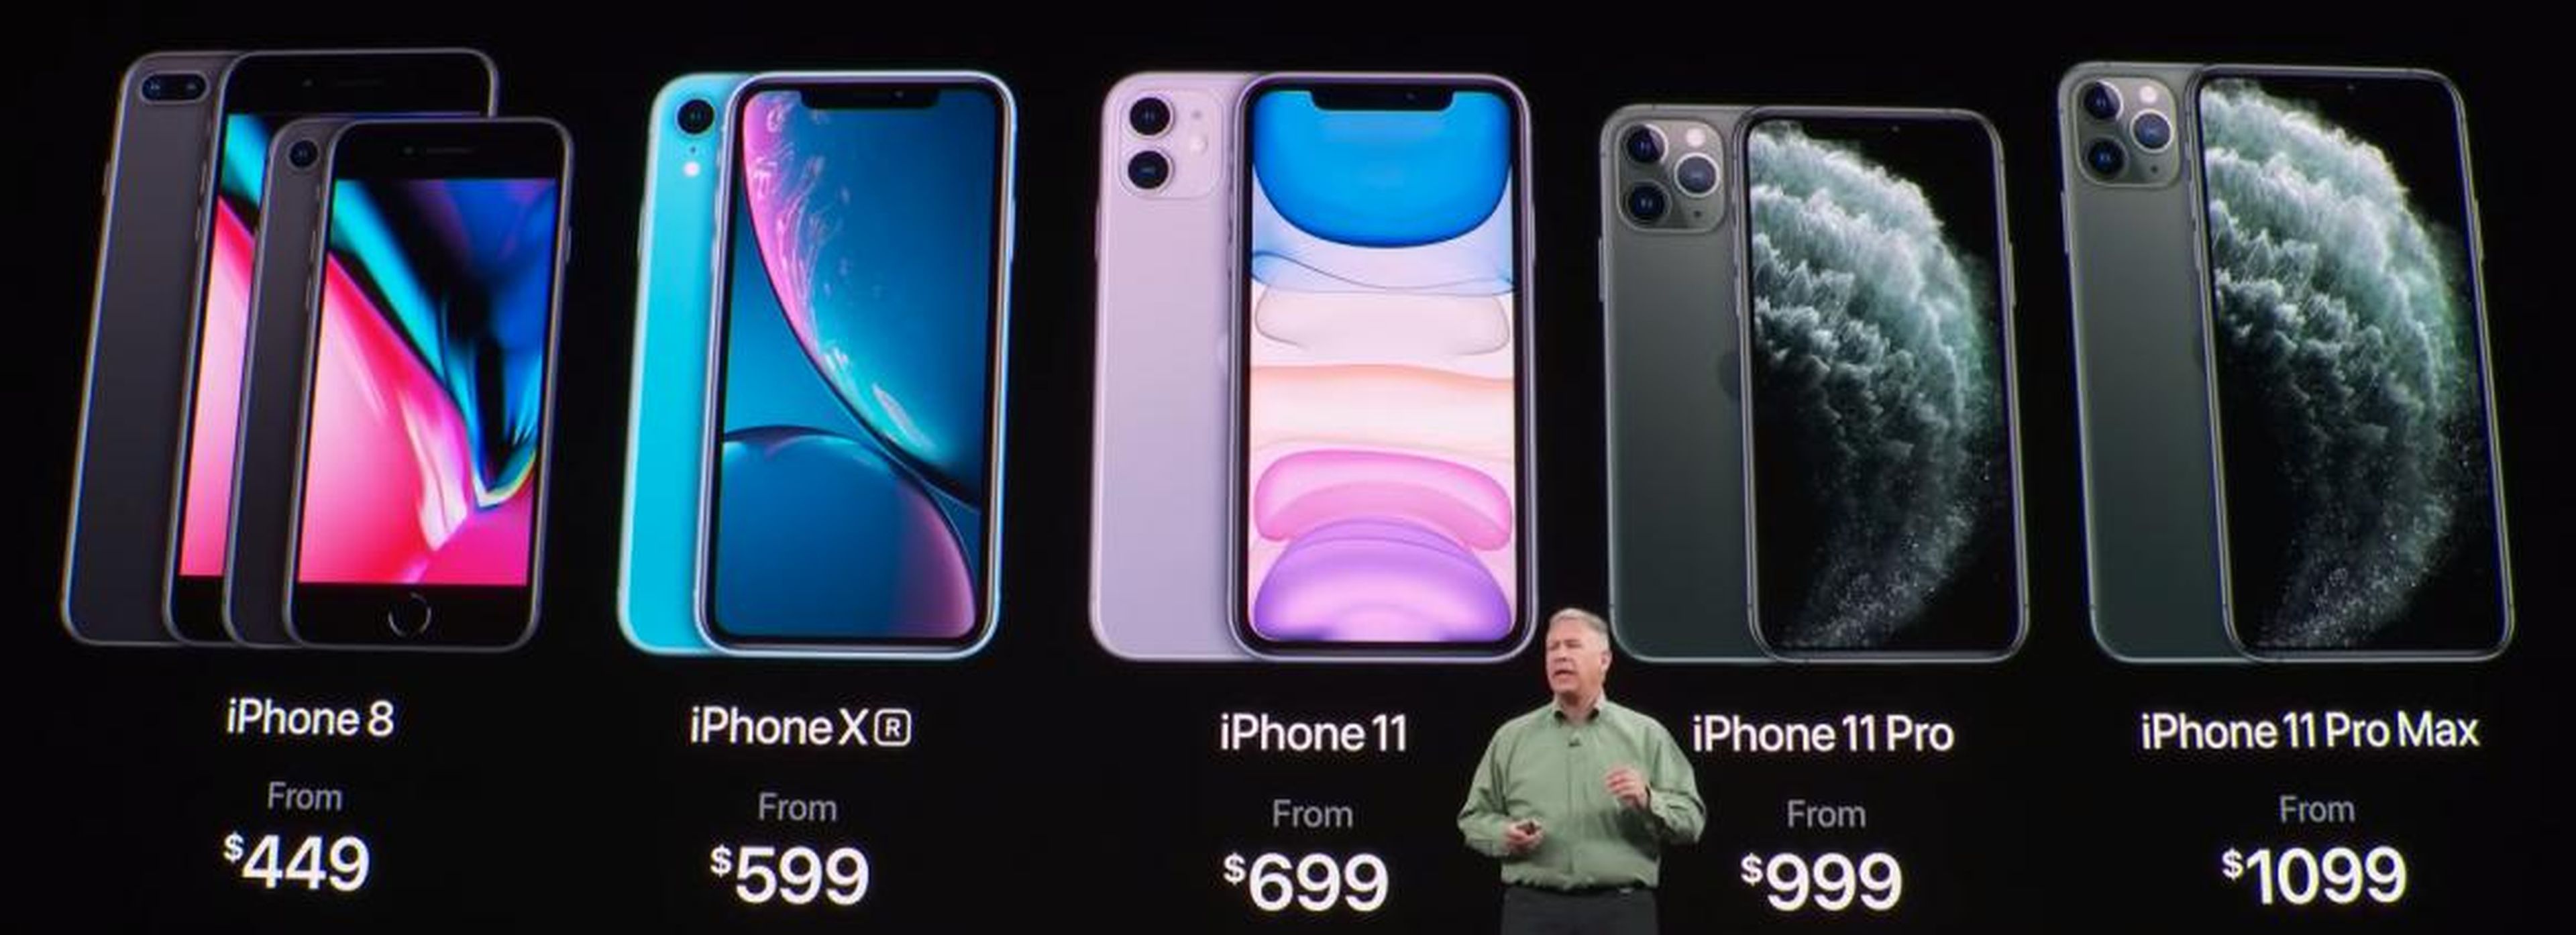 Apple's 2019 iPhone lineup.